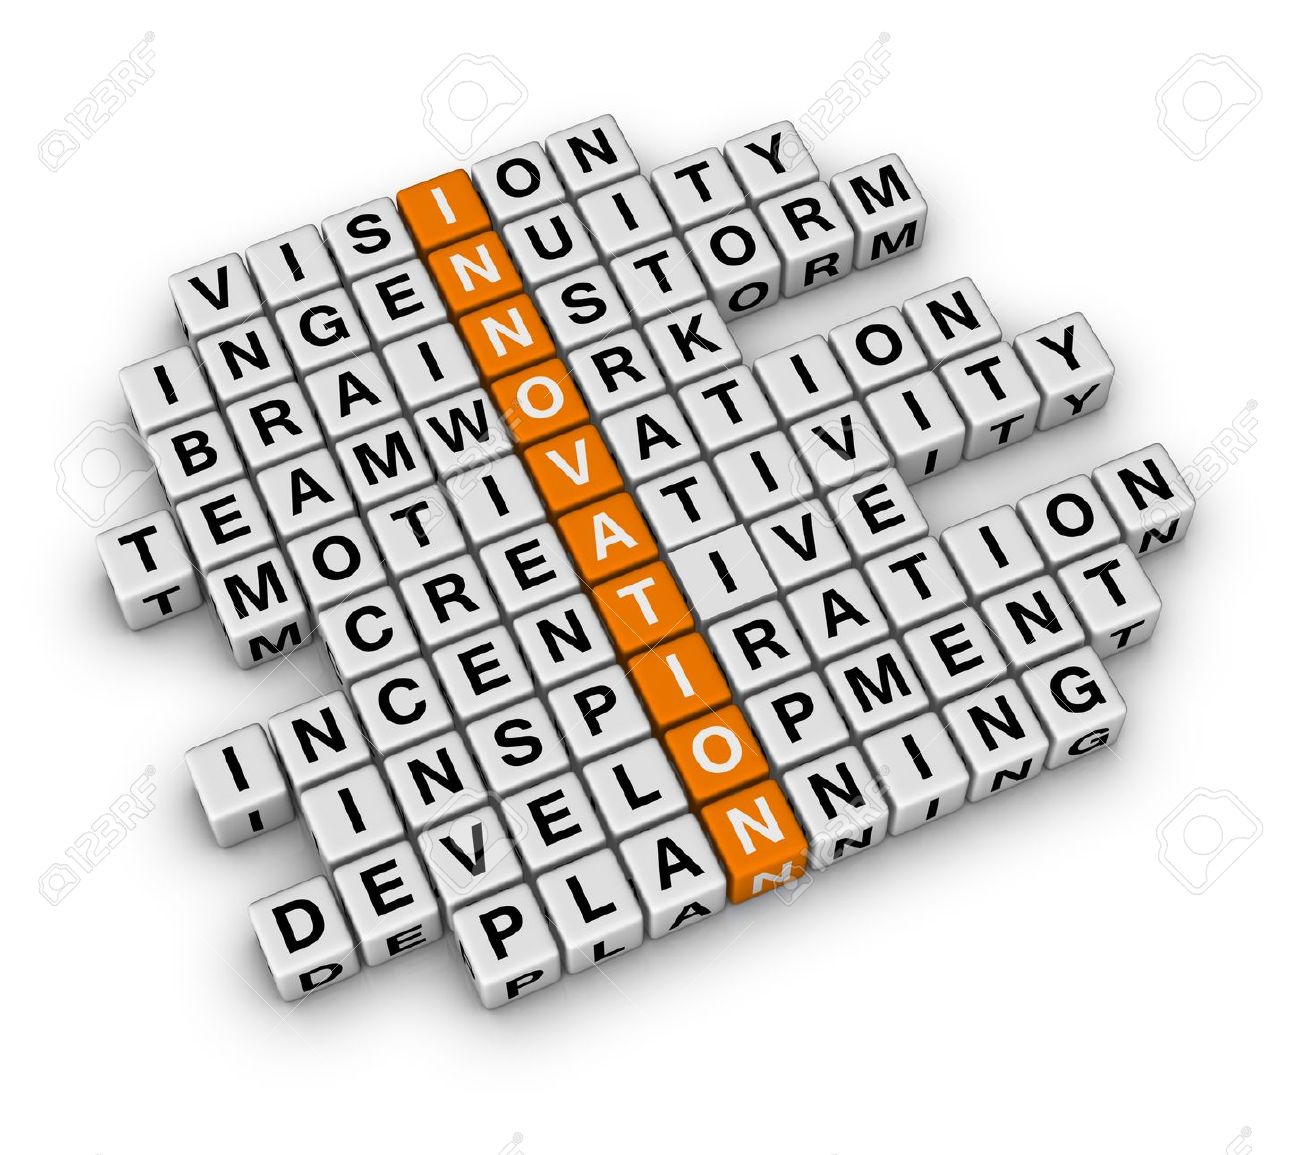 8773271-new-business-innovation-3d-crossword-orange-series-stock-photo